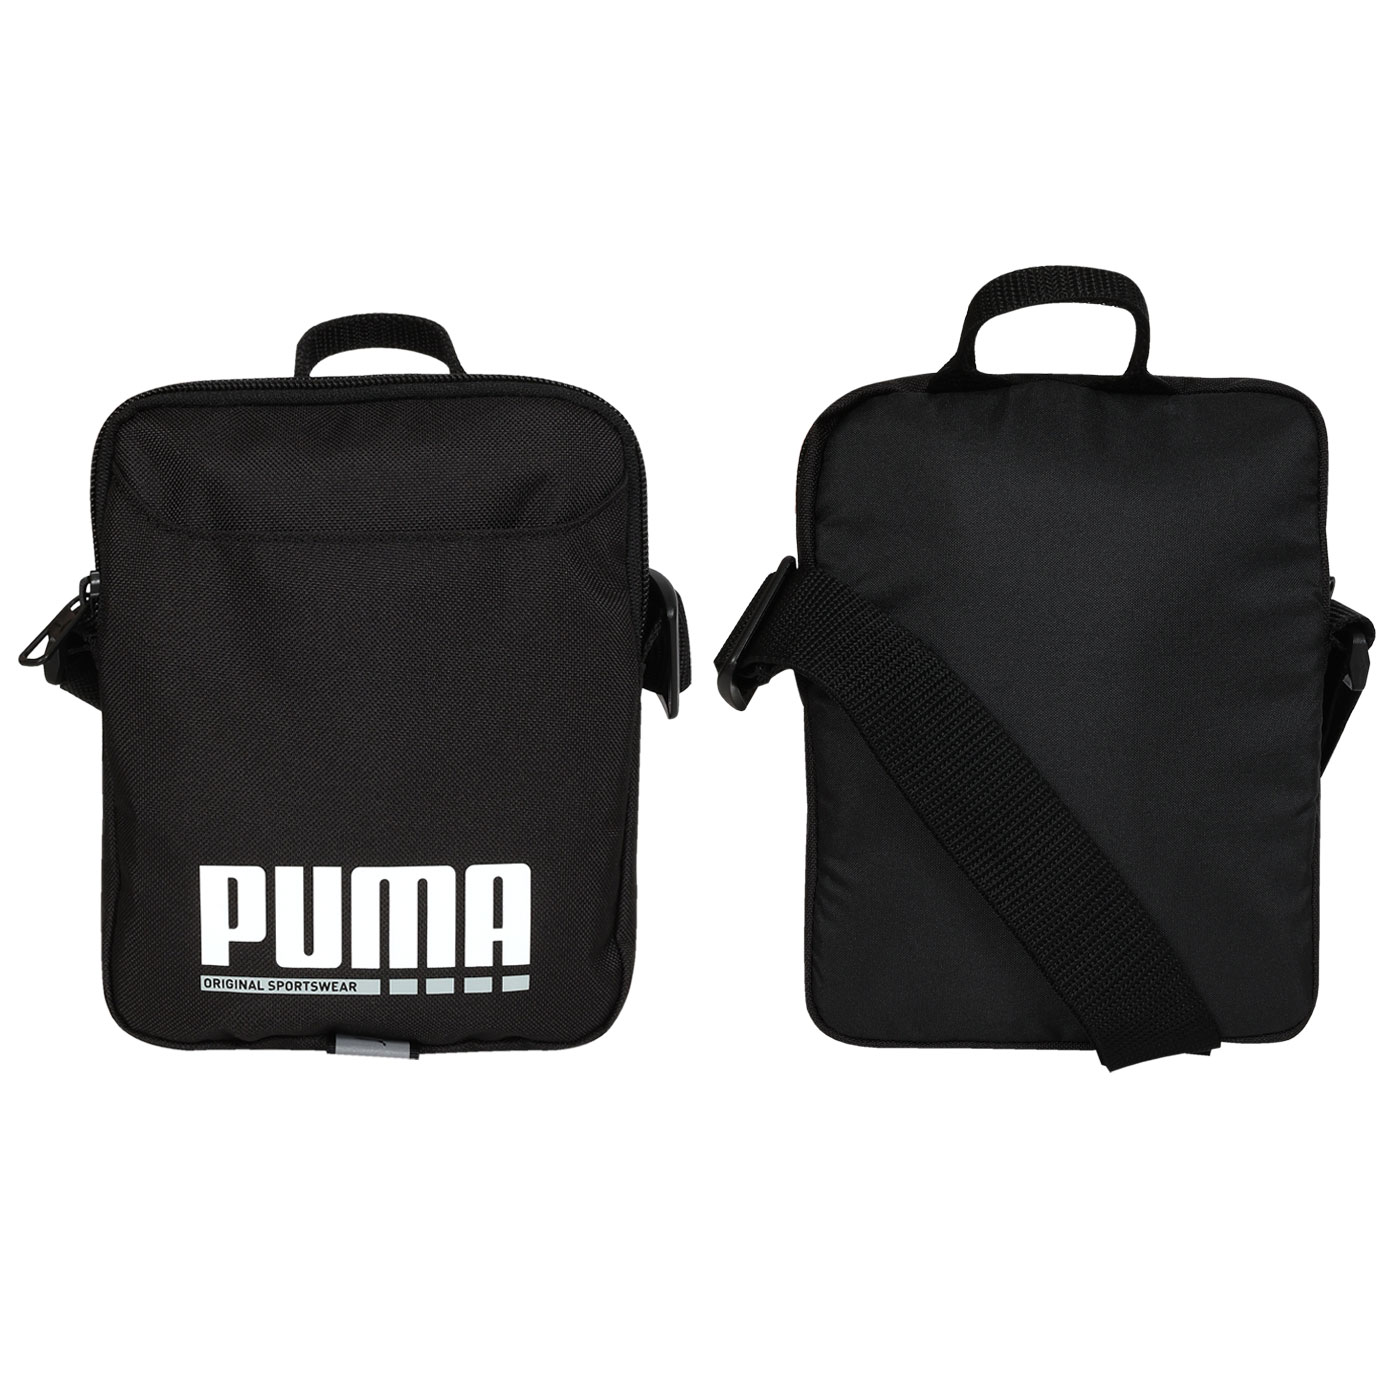 PUMA Plus側背小包  09095501 - 黑白灰